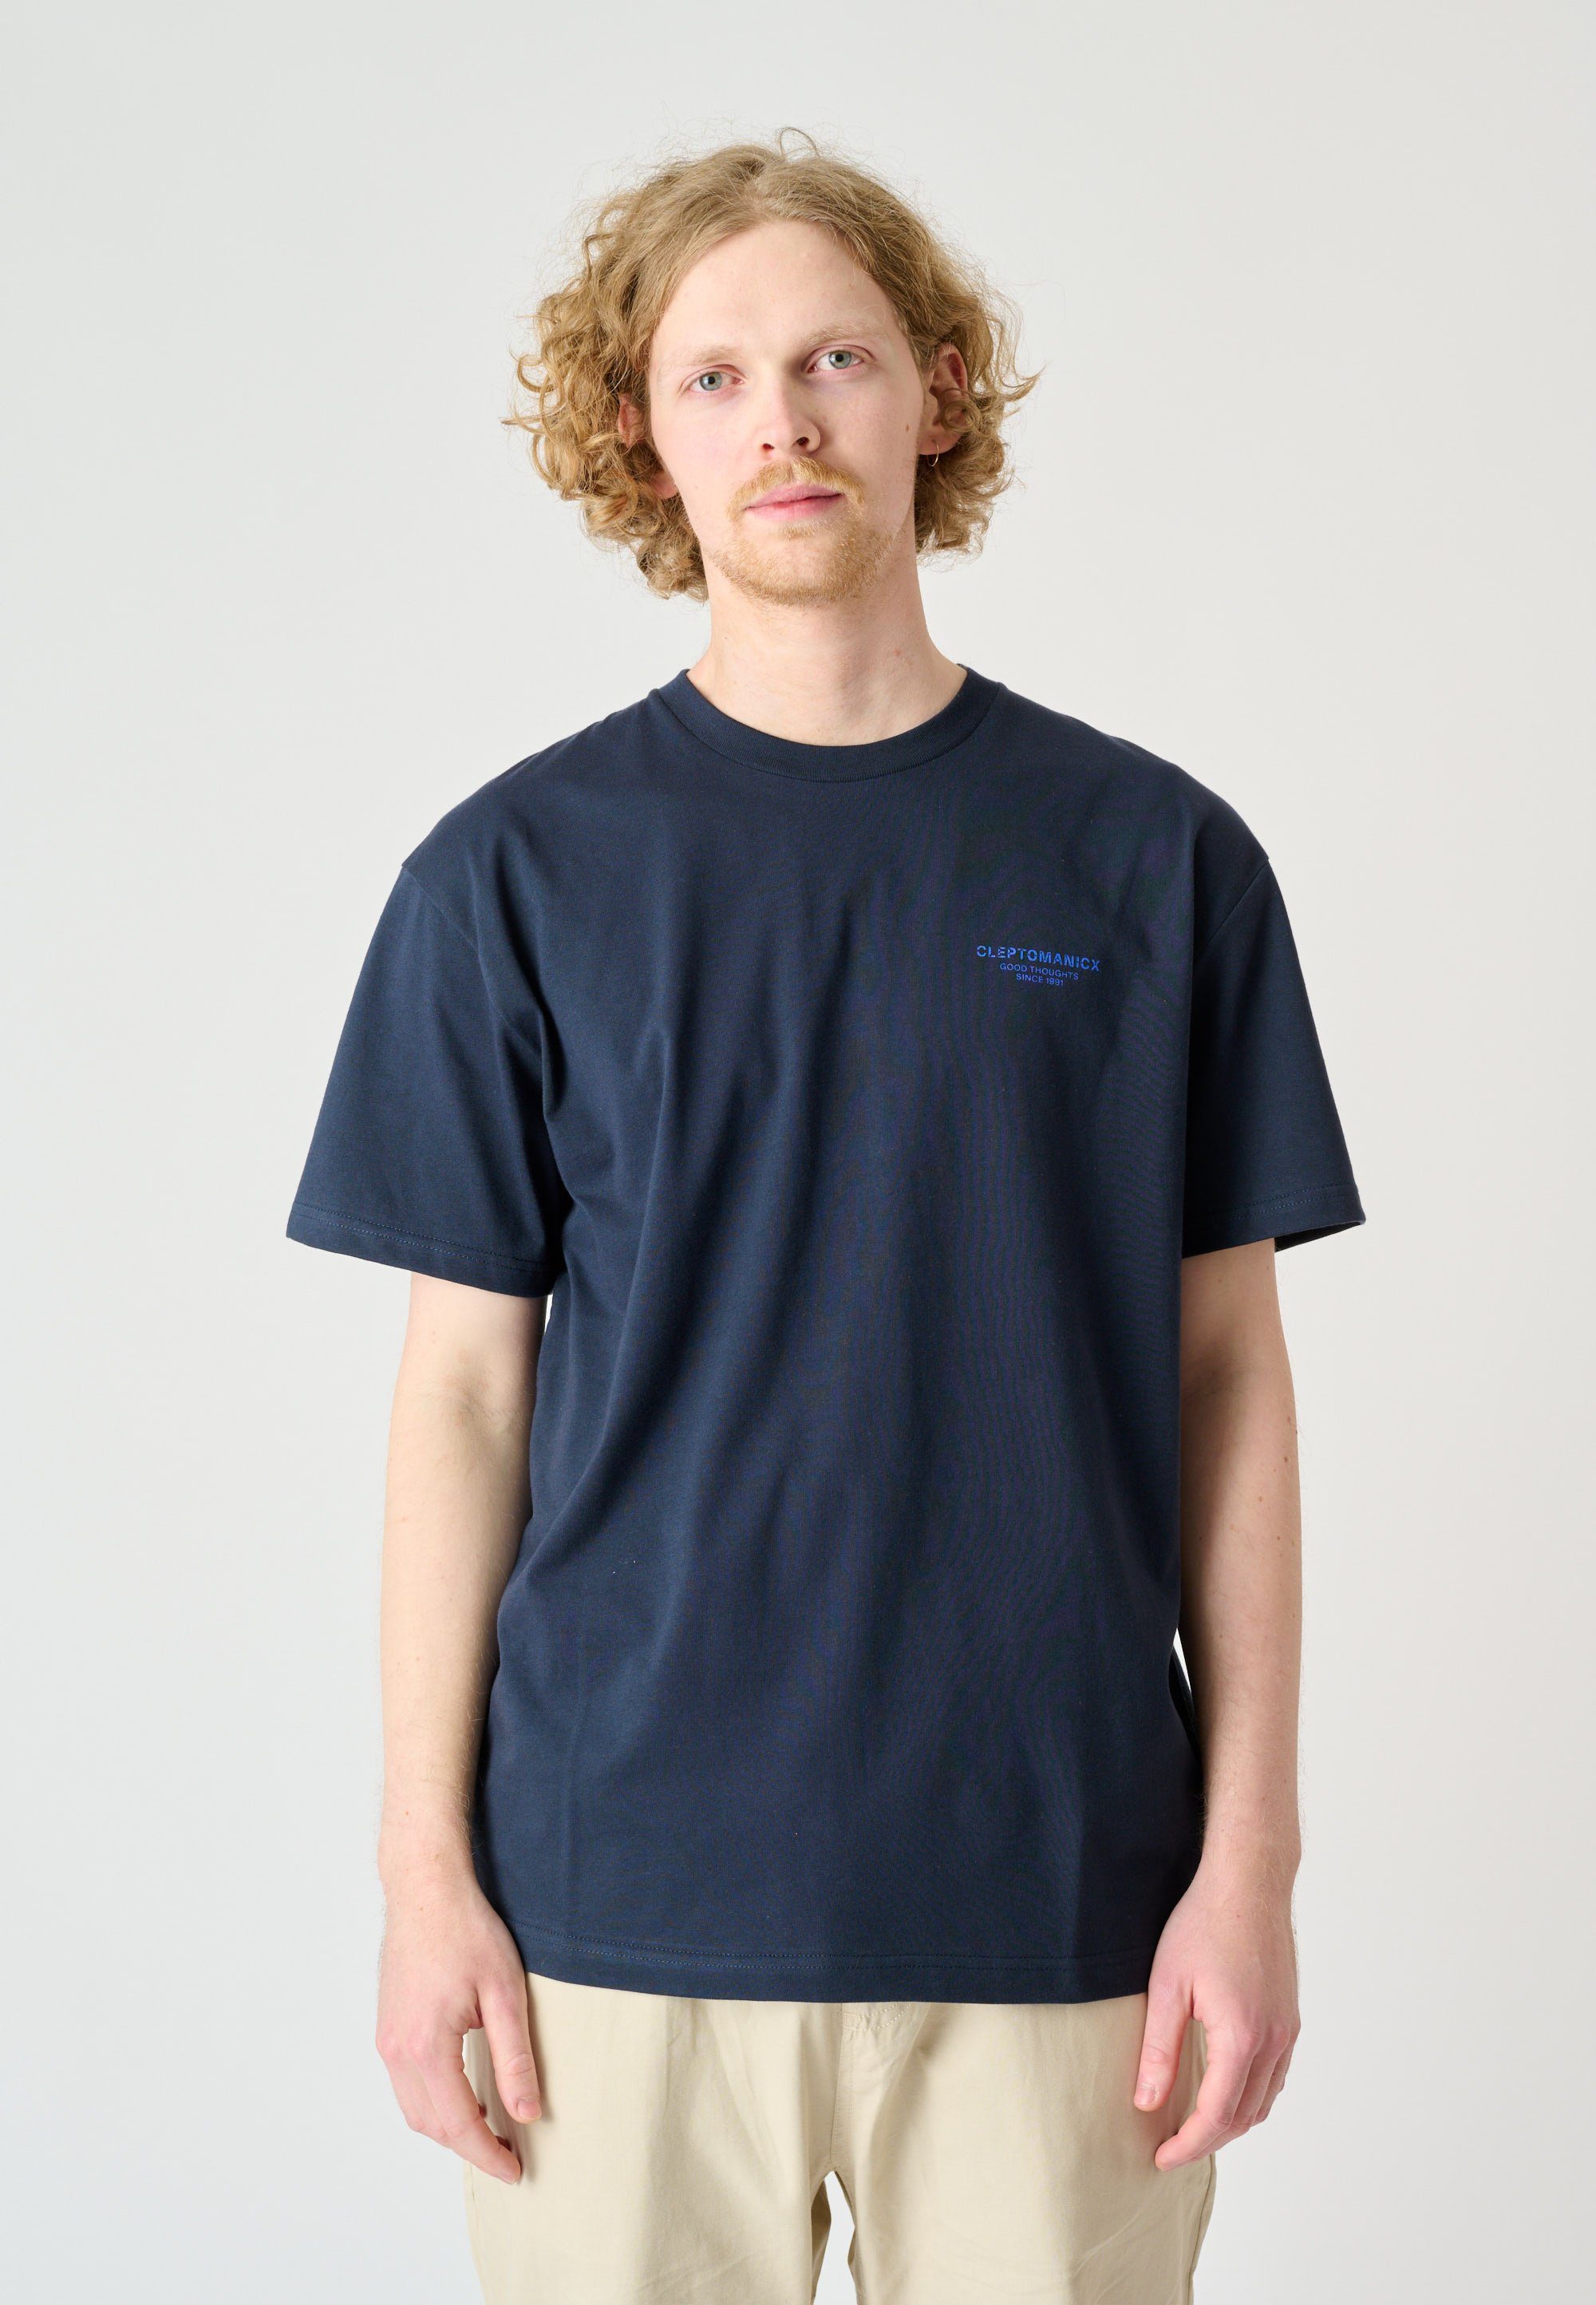 Cleptomanicx T-Shirt Source mit großem Backprint, Ton-in-Ton-Nähte